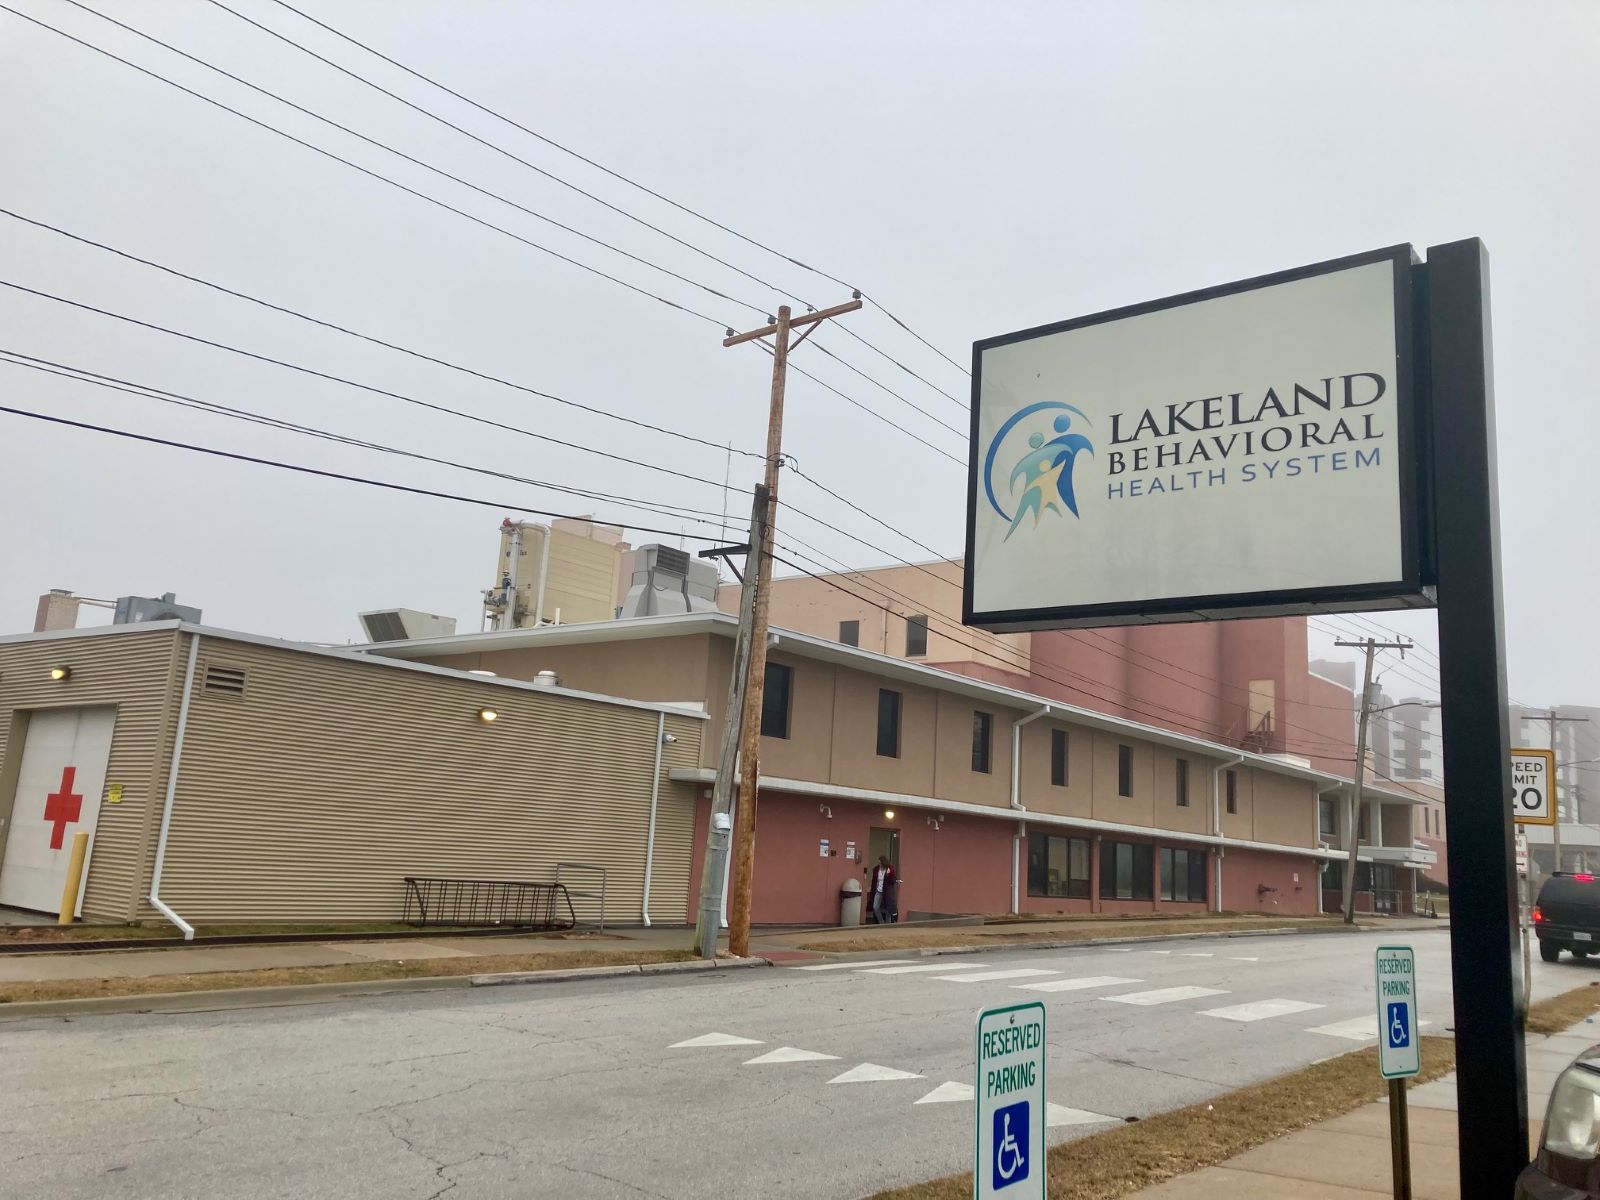 Lakeland Behavioral Health System